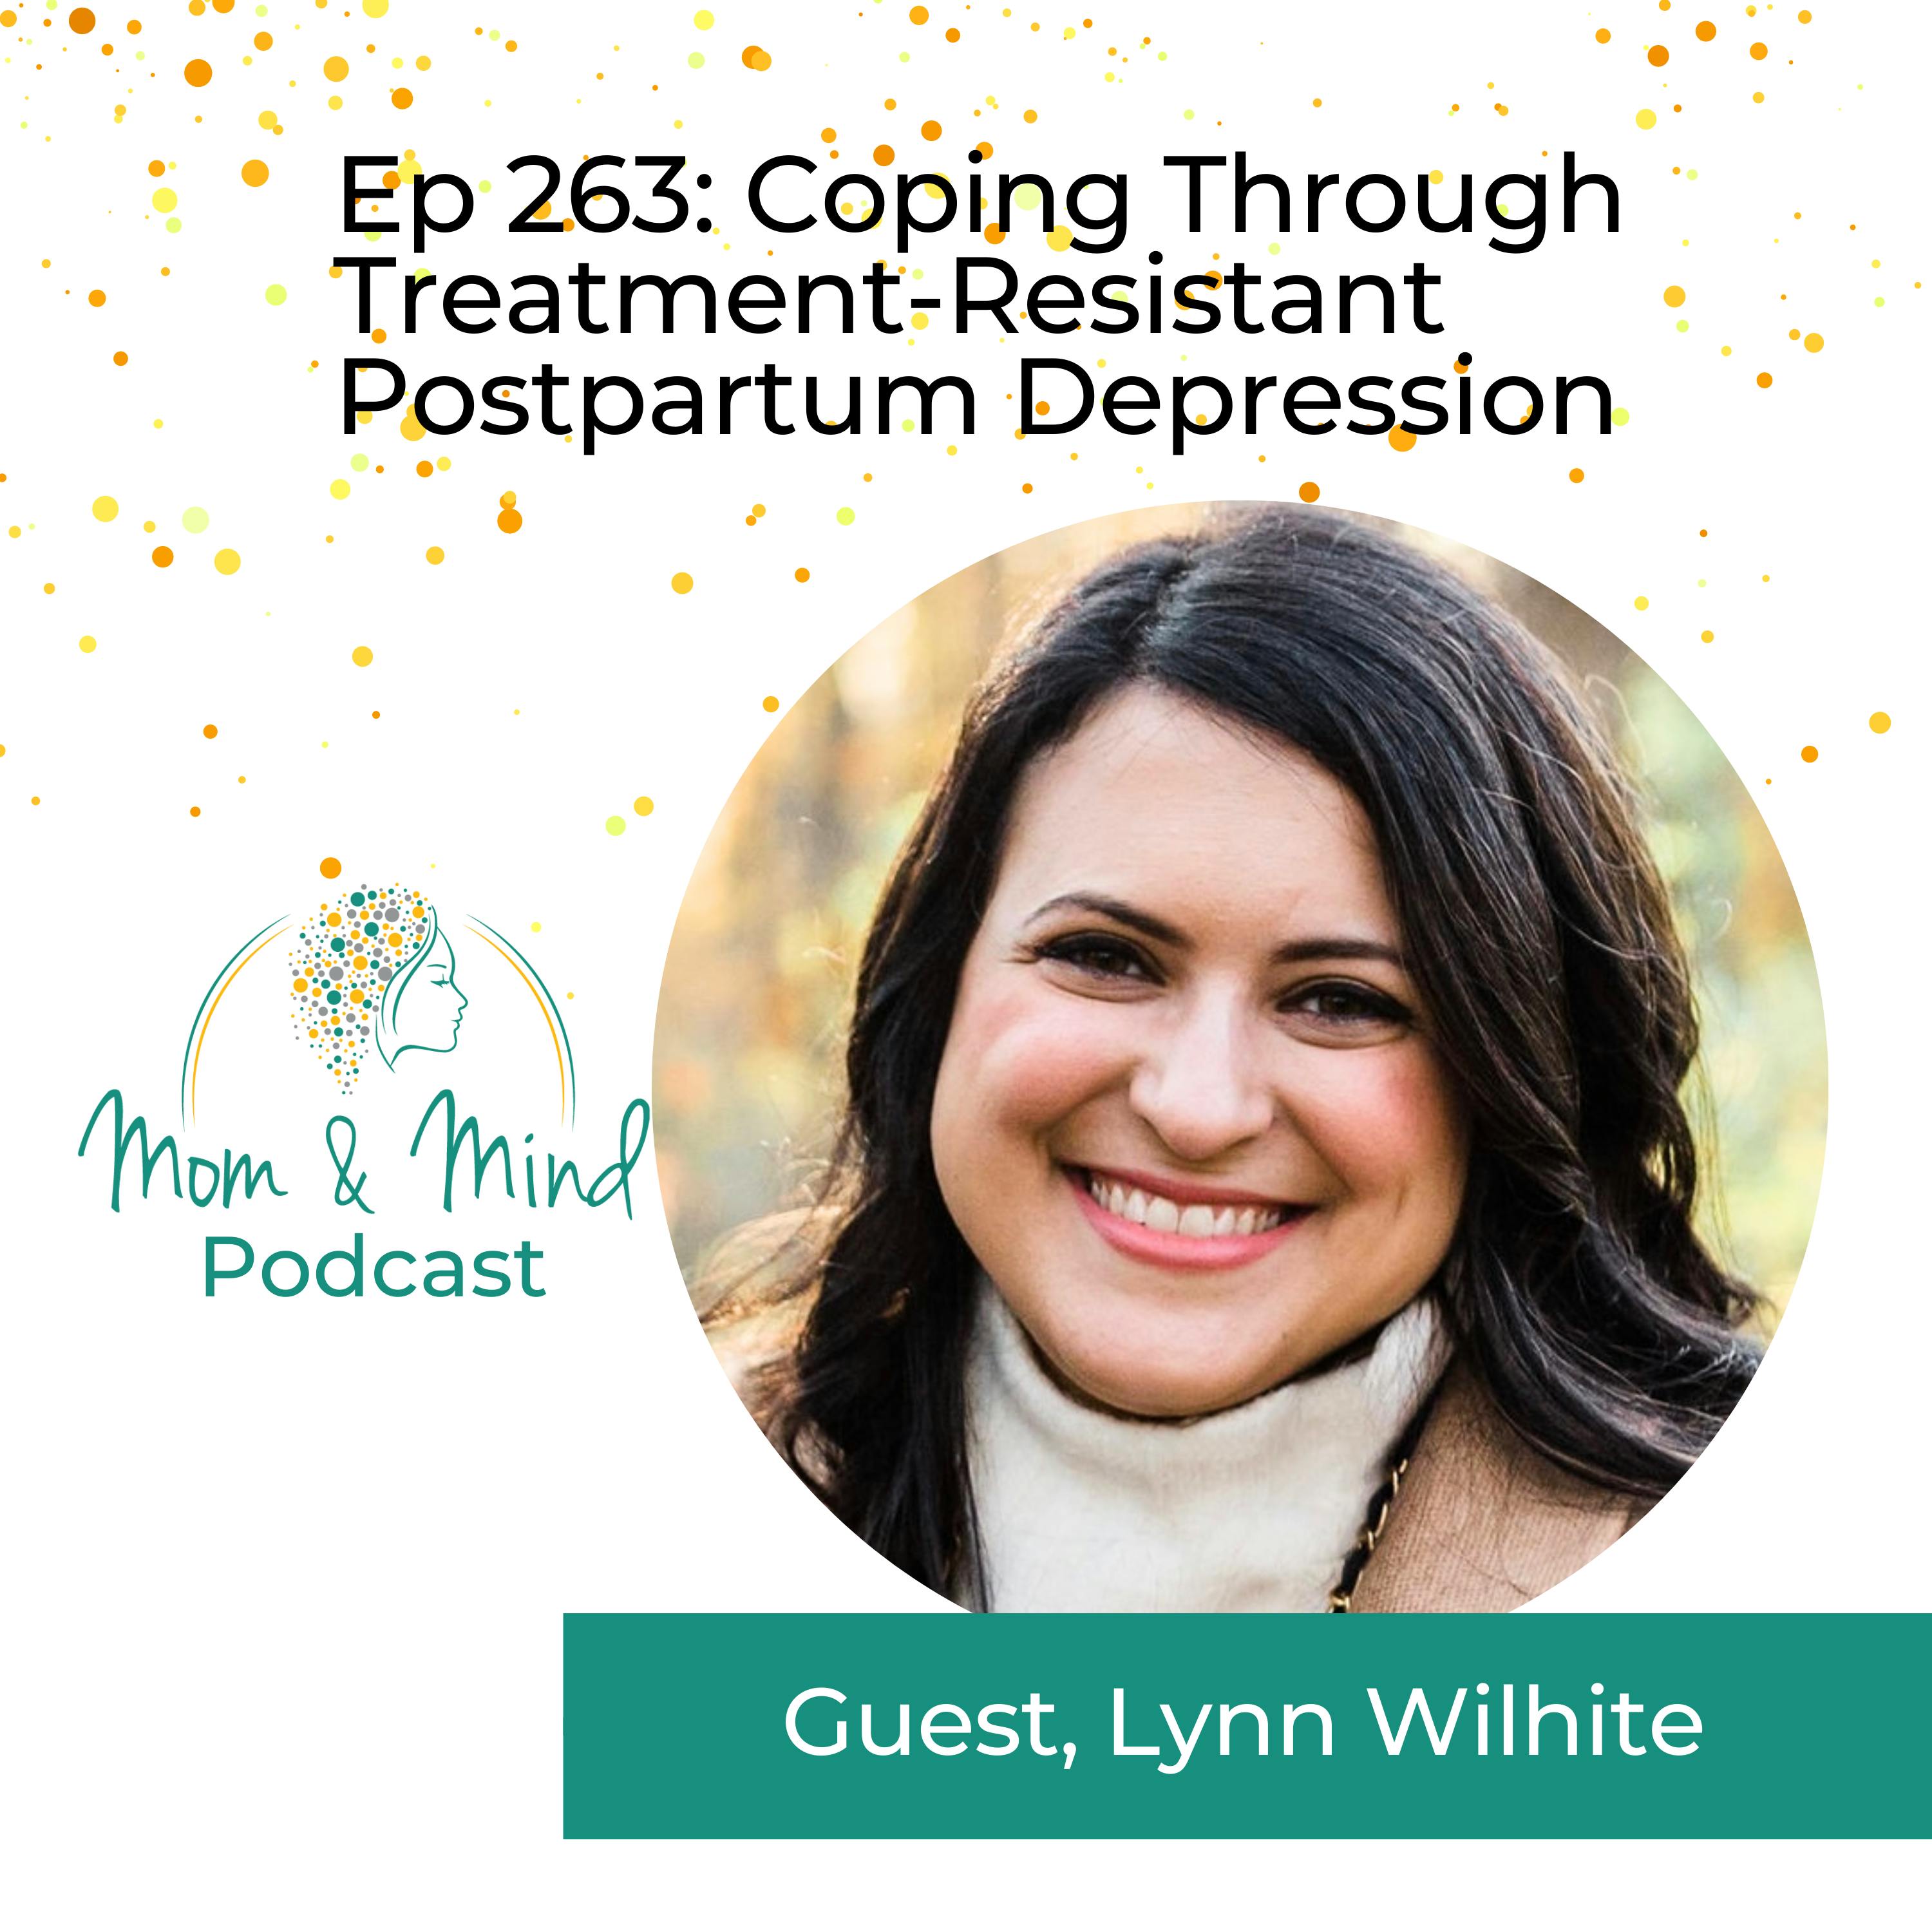 263: Coping Through Treatment-Resistant Postpartum Depression with Lynn Wilhite